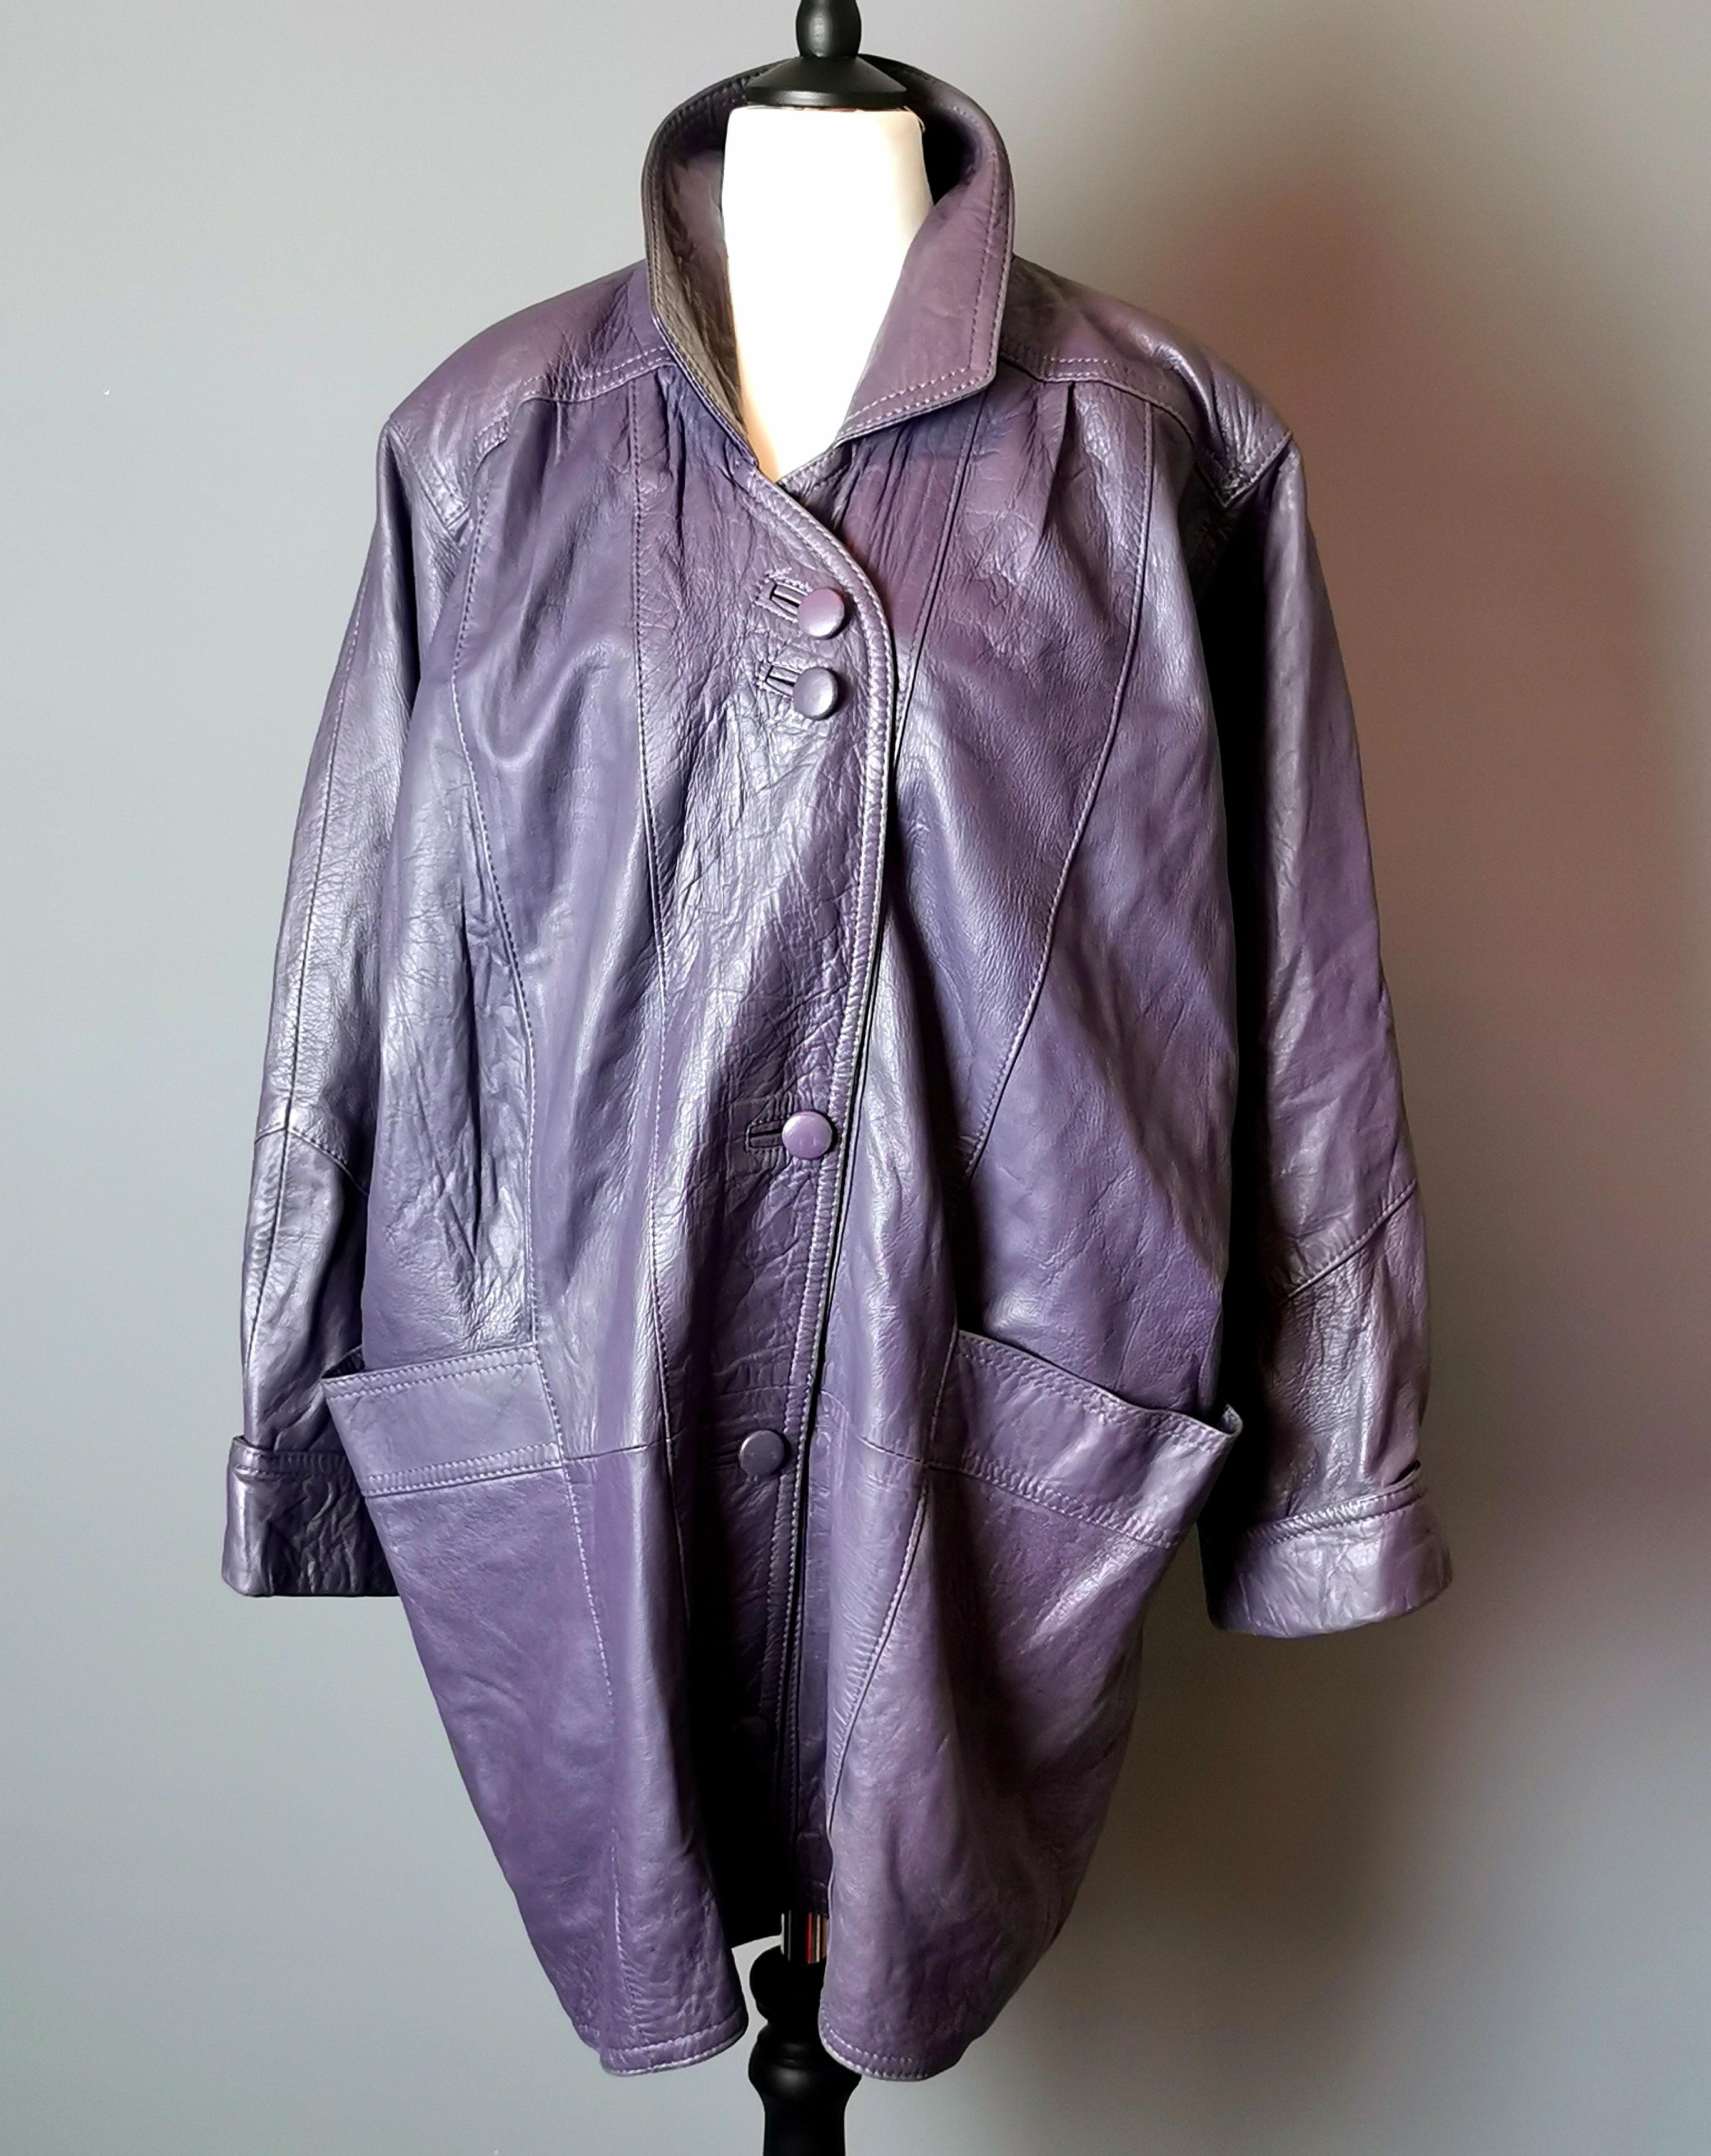 Gray Vintage 1980s oversized leather jacket, purple 